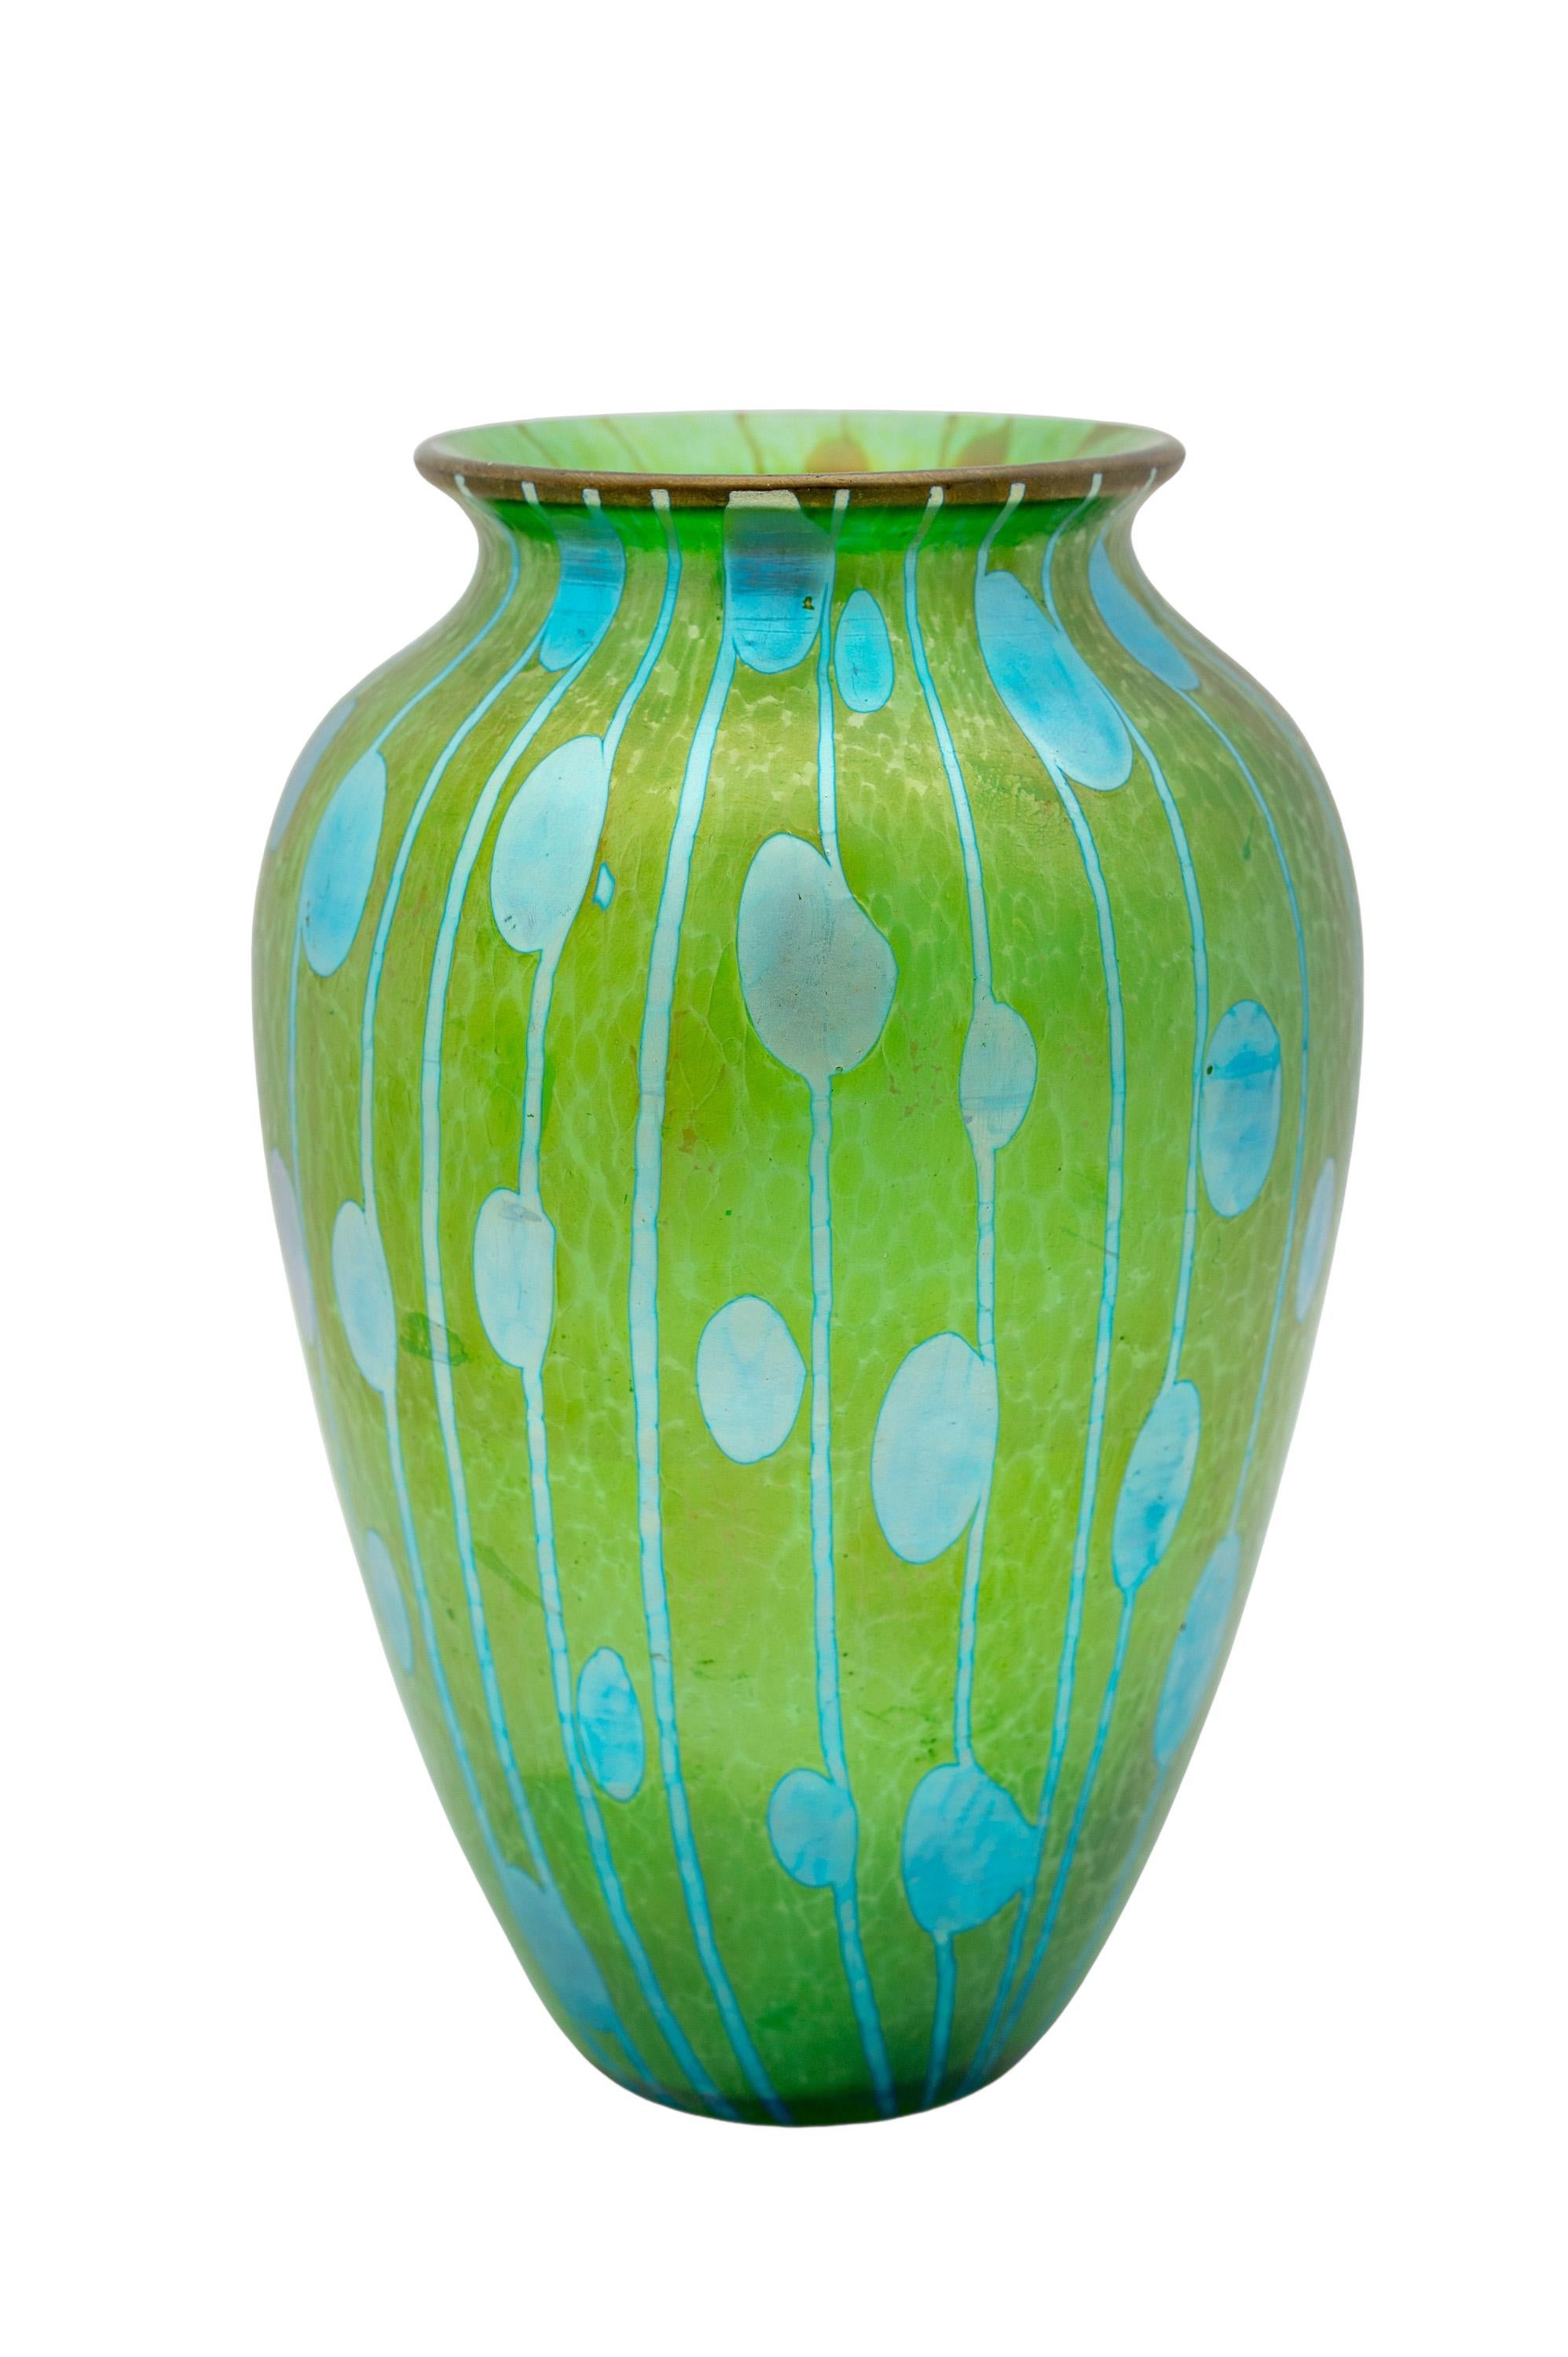 Bohemian Glass Vase Loetz Koloman Moser circa 1900 Blue Green In Good Condition For Sale In Klosterneuburg, AT